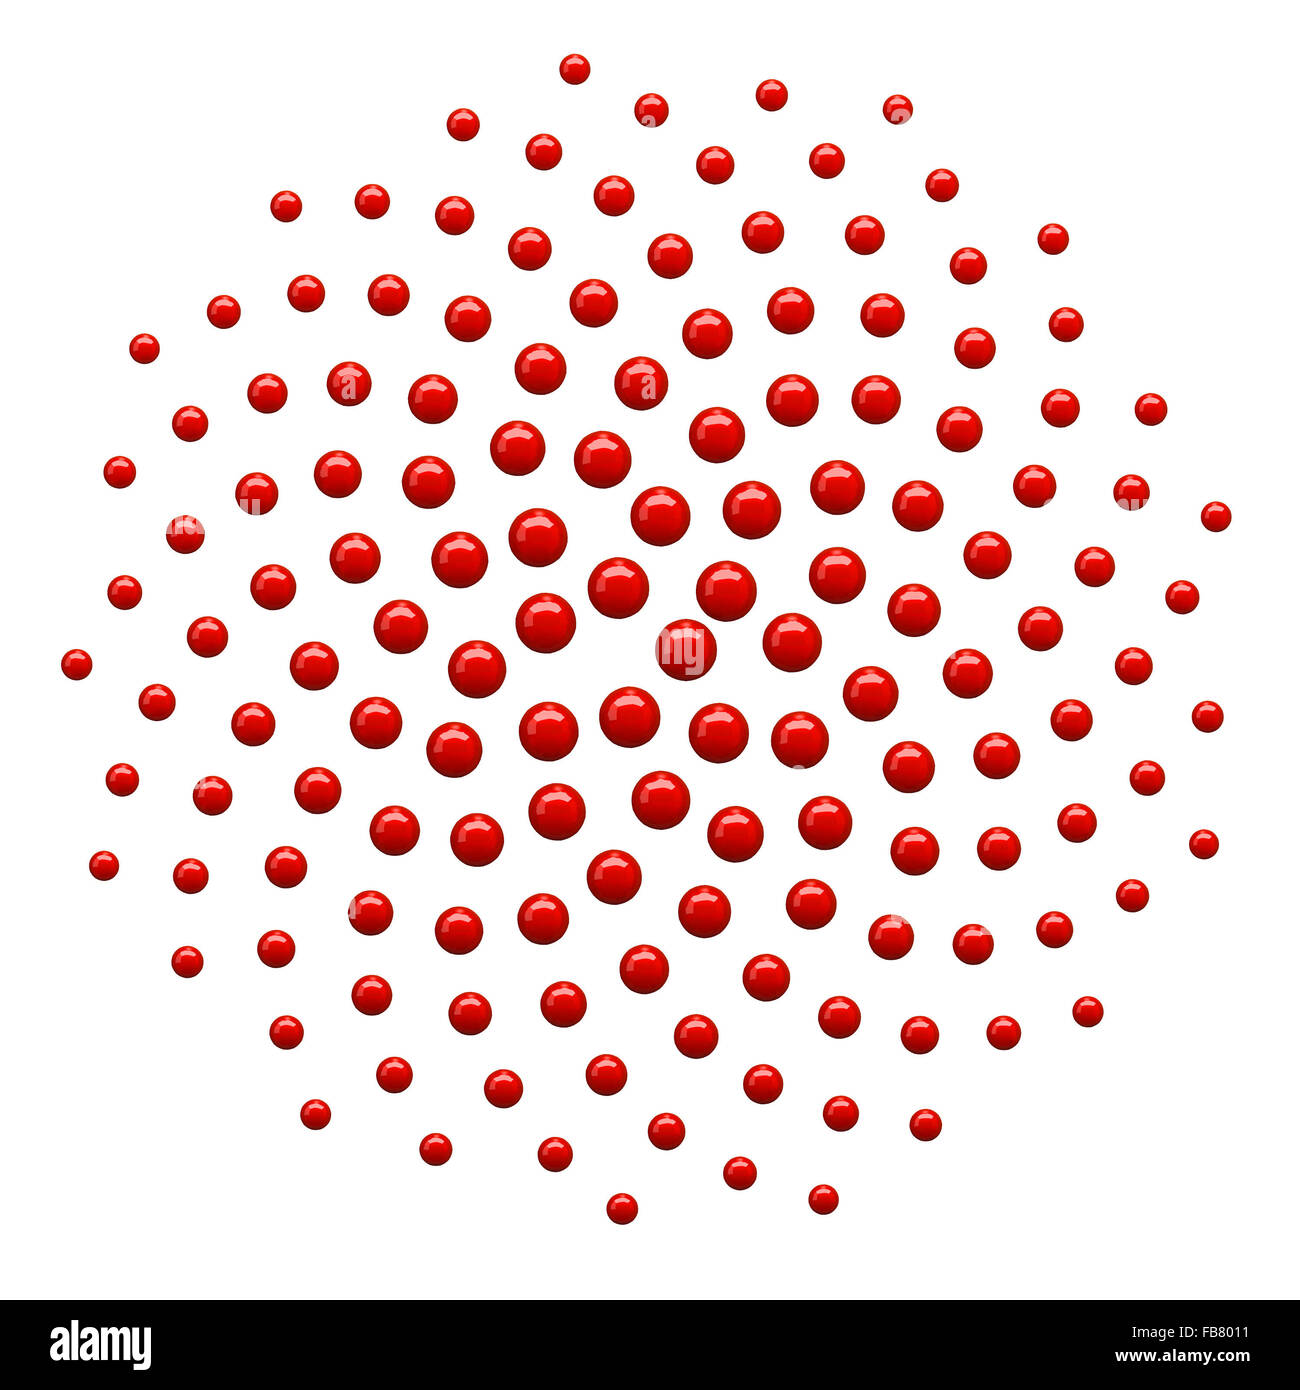 Royalty free clipart illustration of a 3d red spiral fibonacci mathematics dot pattern, on a white background. Stock Photo